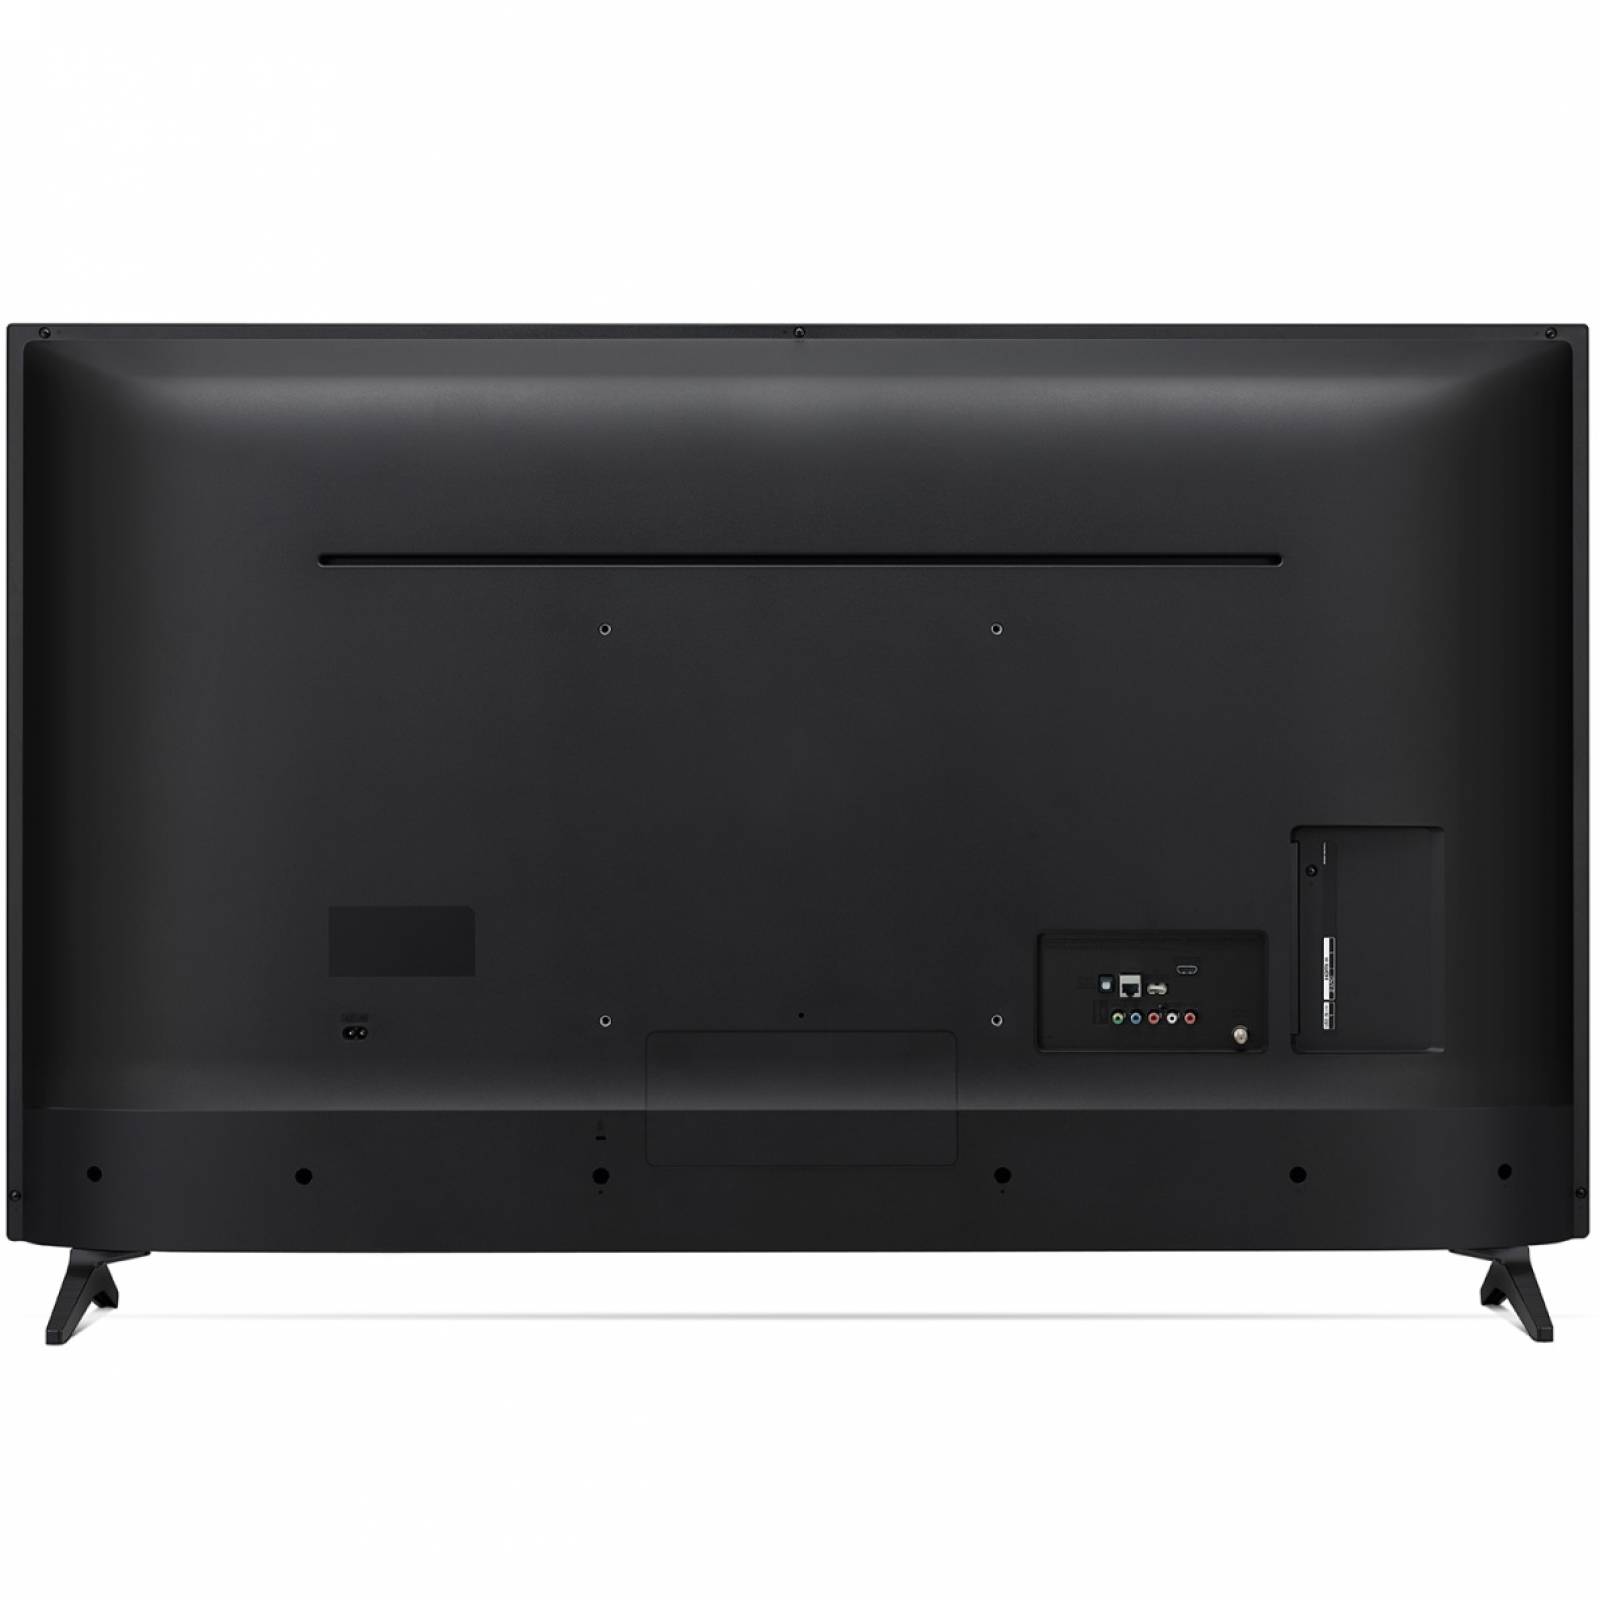 Smart TV 55 LG 4K HDR10 Panel IPS Clear Voice III 55UM6910PU